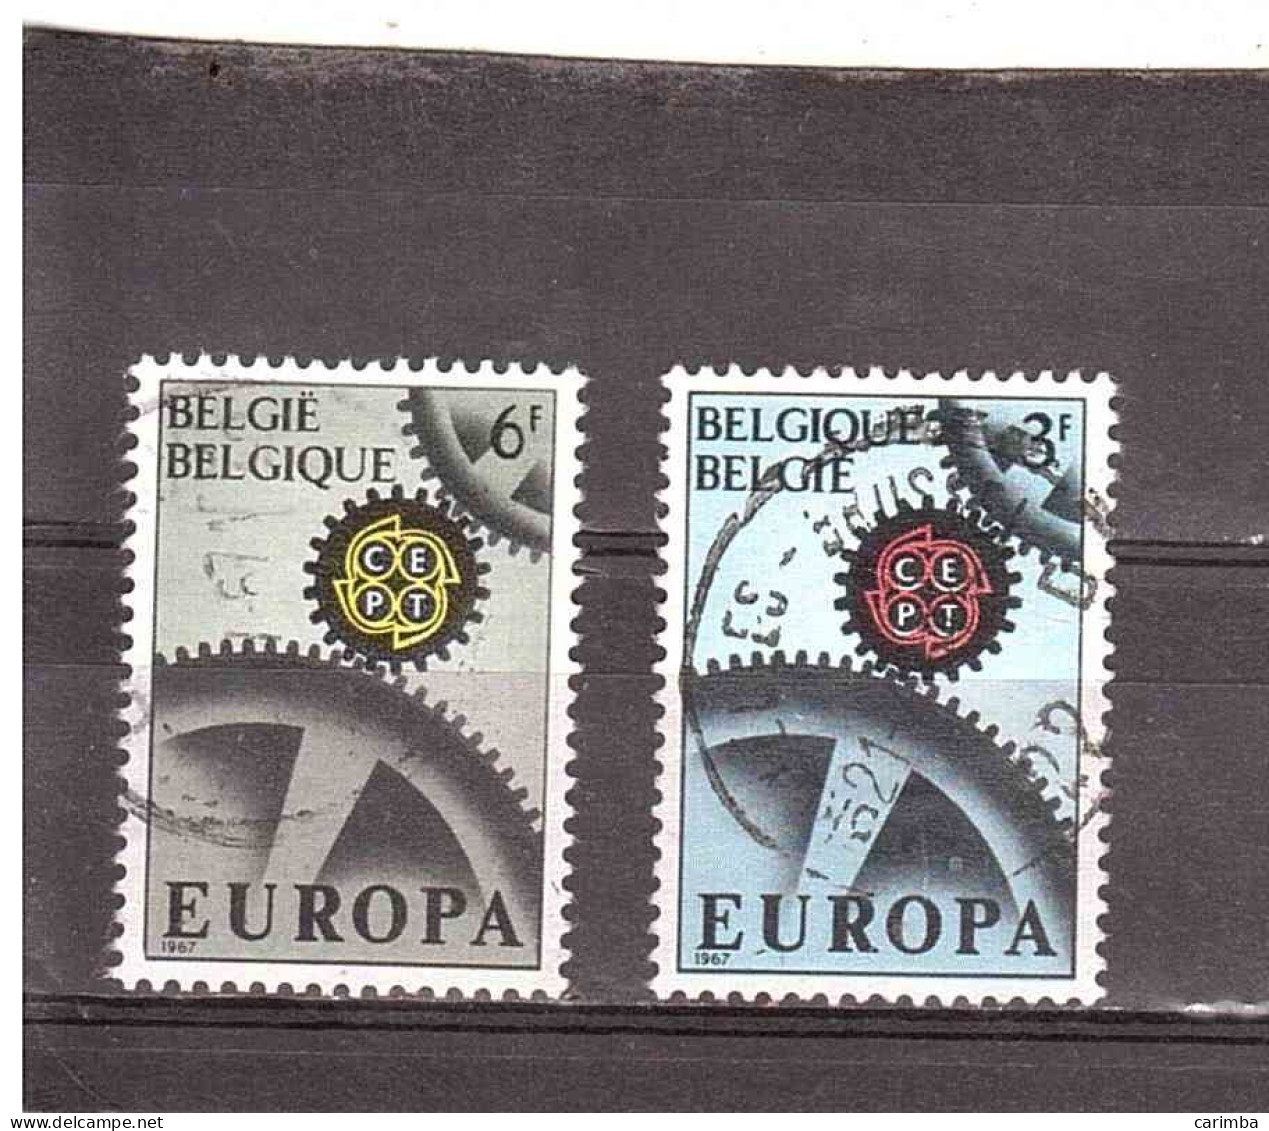 BELGIO 1967 EUROPA - 1967